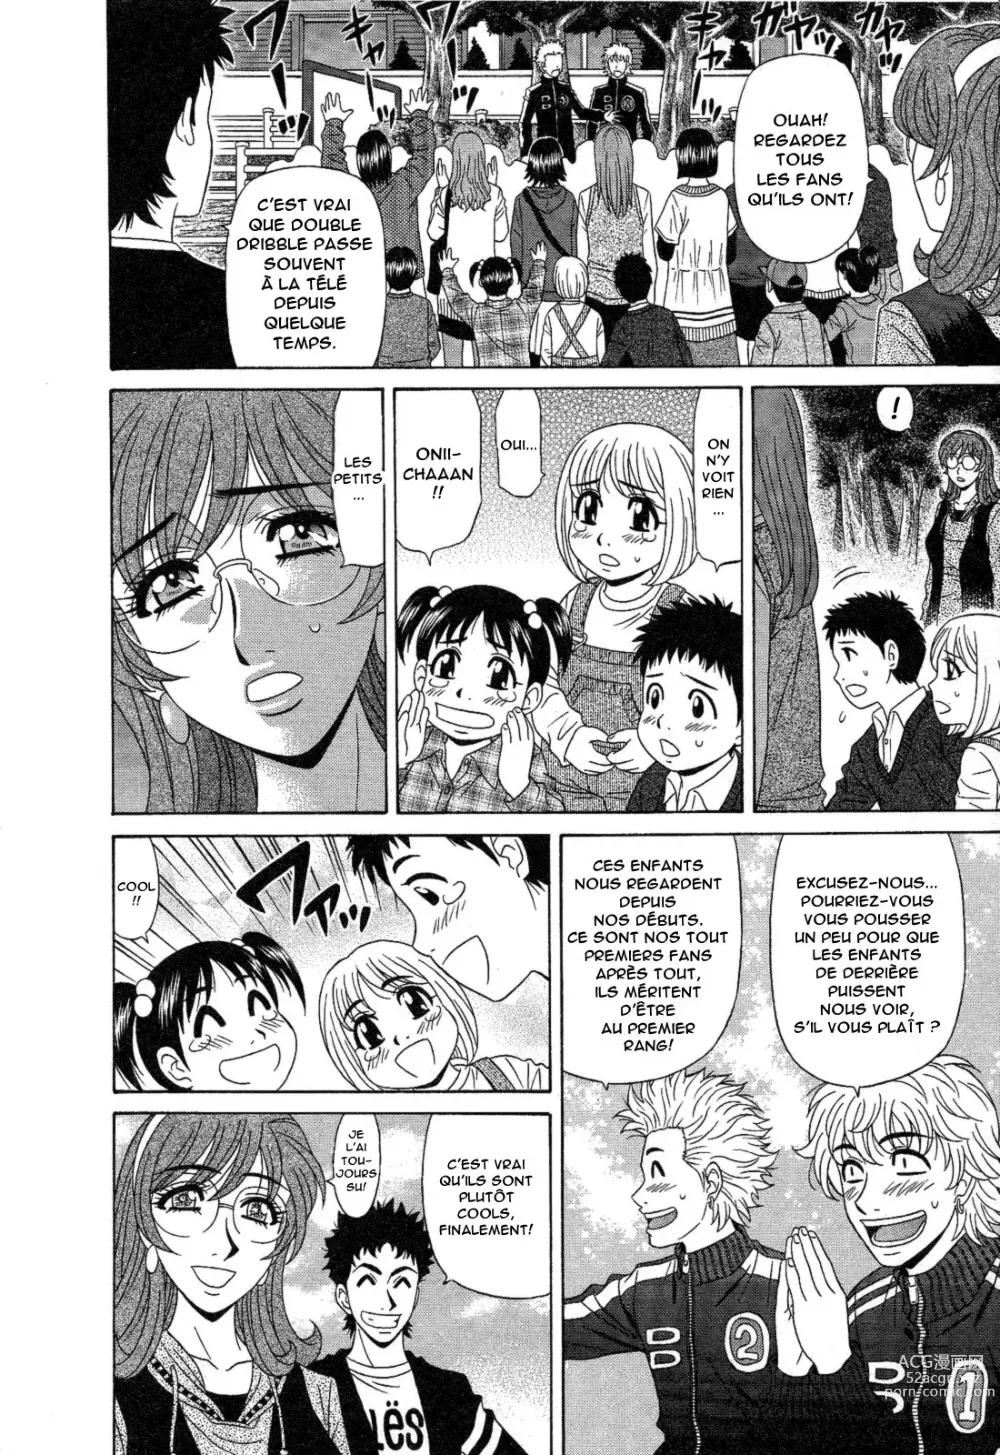 Page 177 of manga Dear Shitamachi Princess Vol. 2